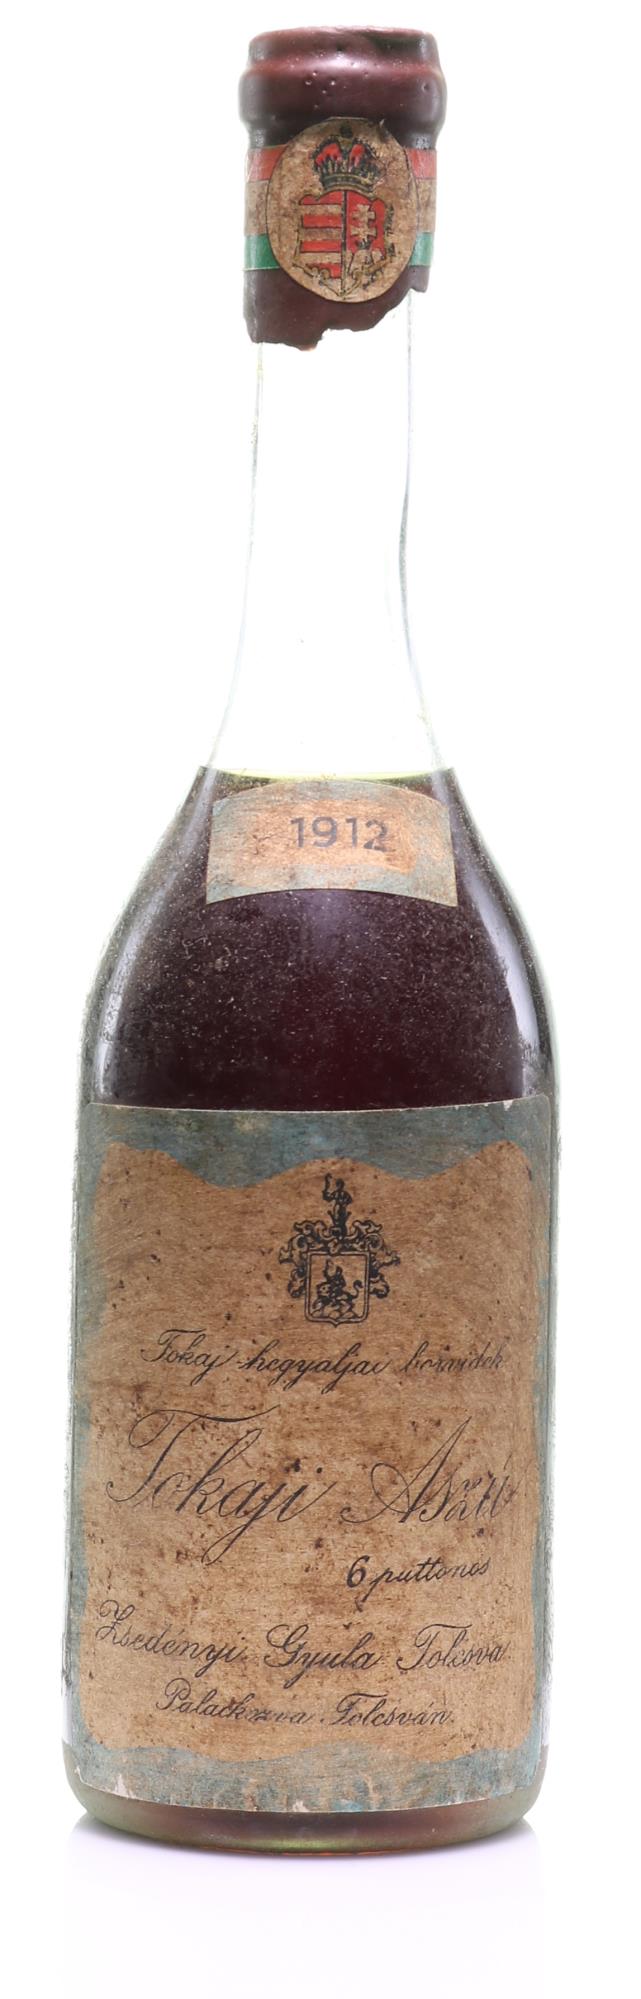 1912 Tokaji Aszu 6 Puttonyos Dessert Wine - Rue Pinard